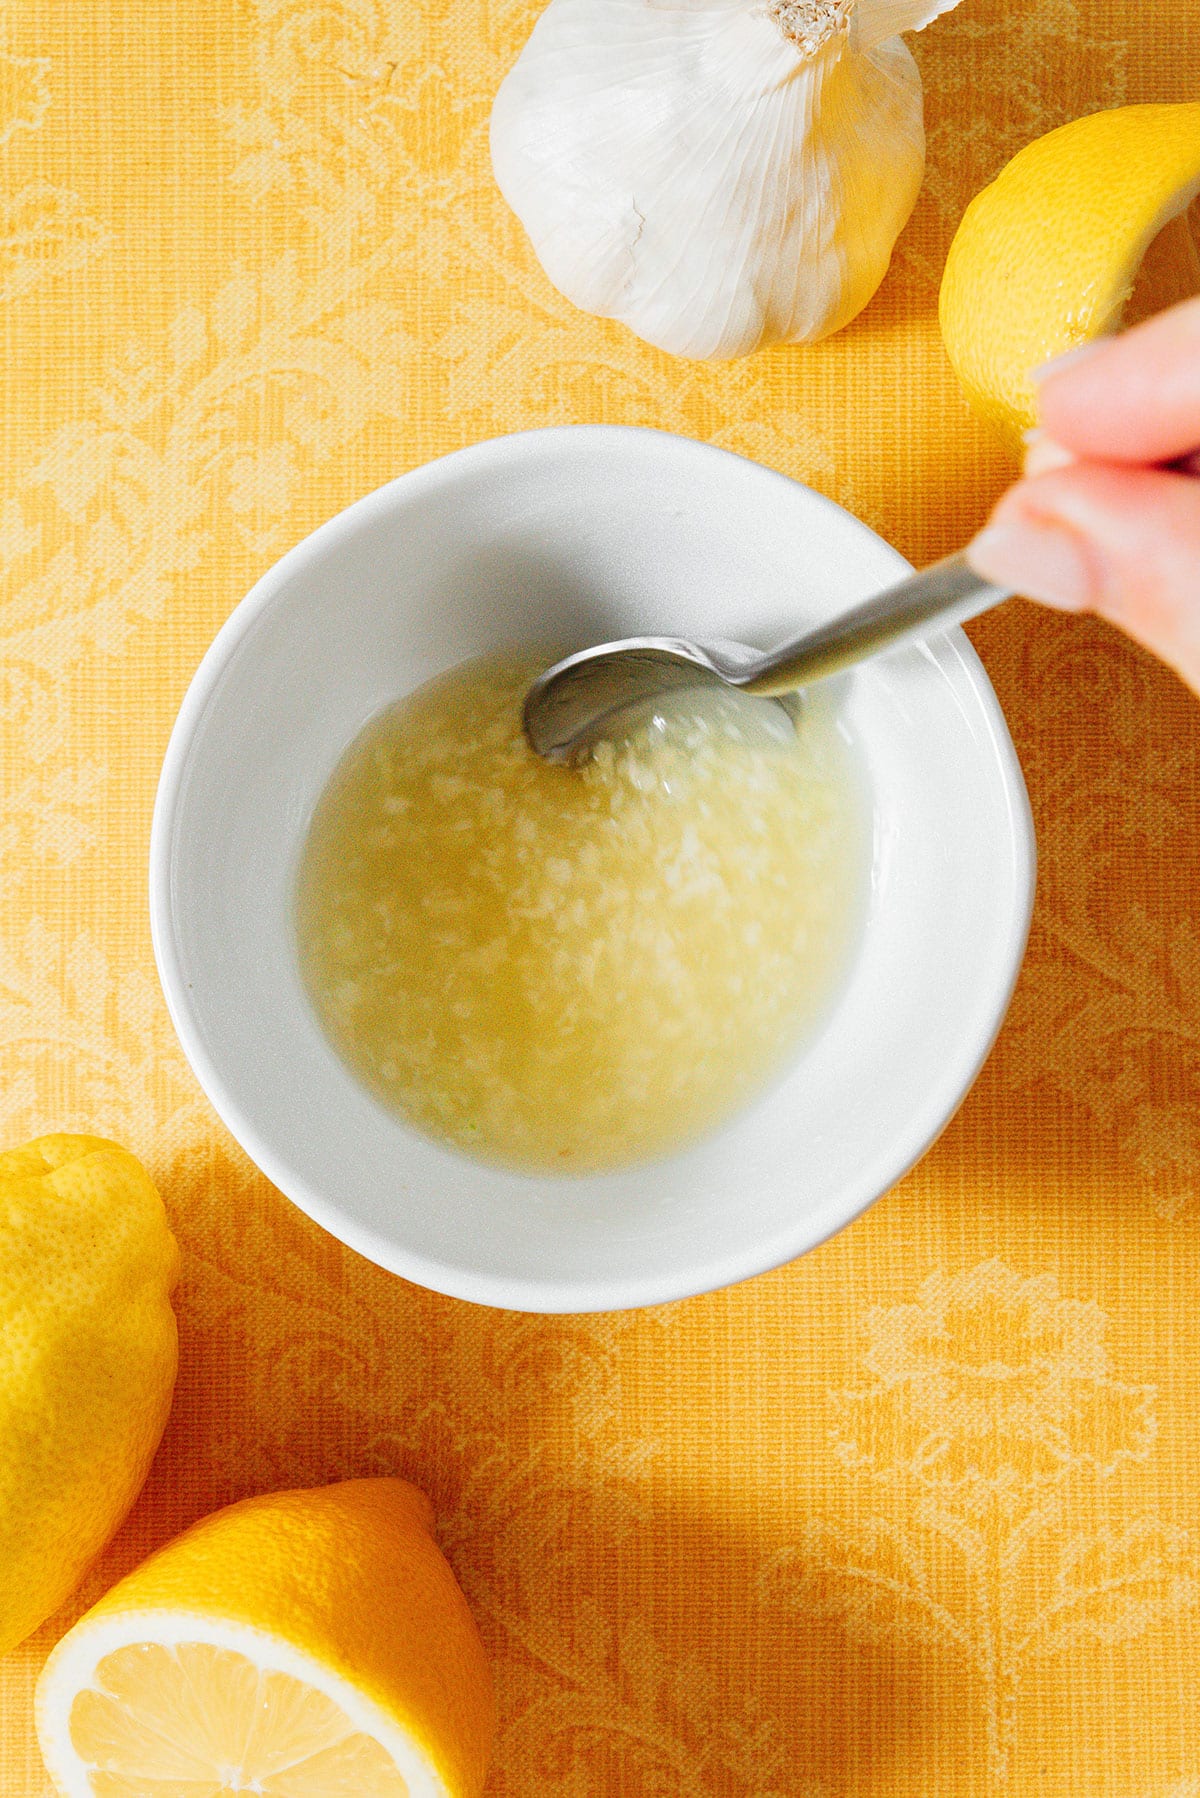 Stirring lemon and garlic in a bowl.